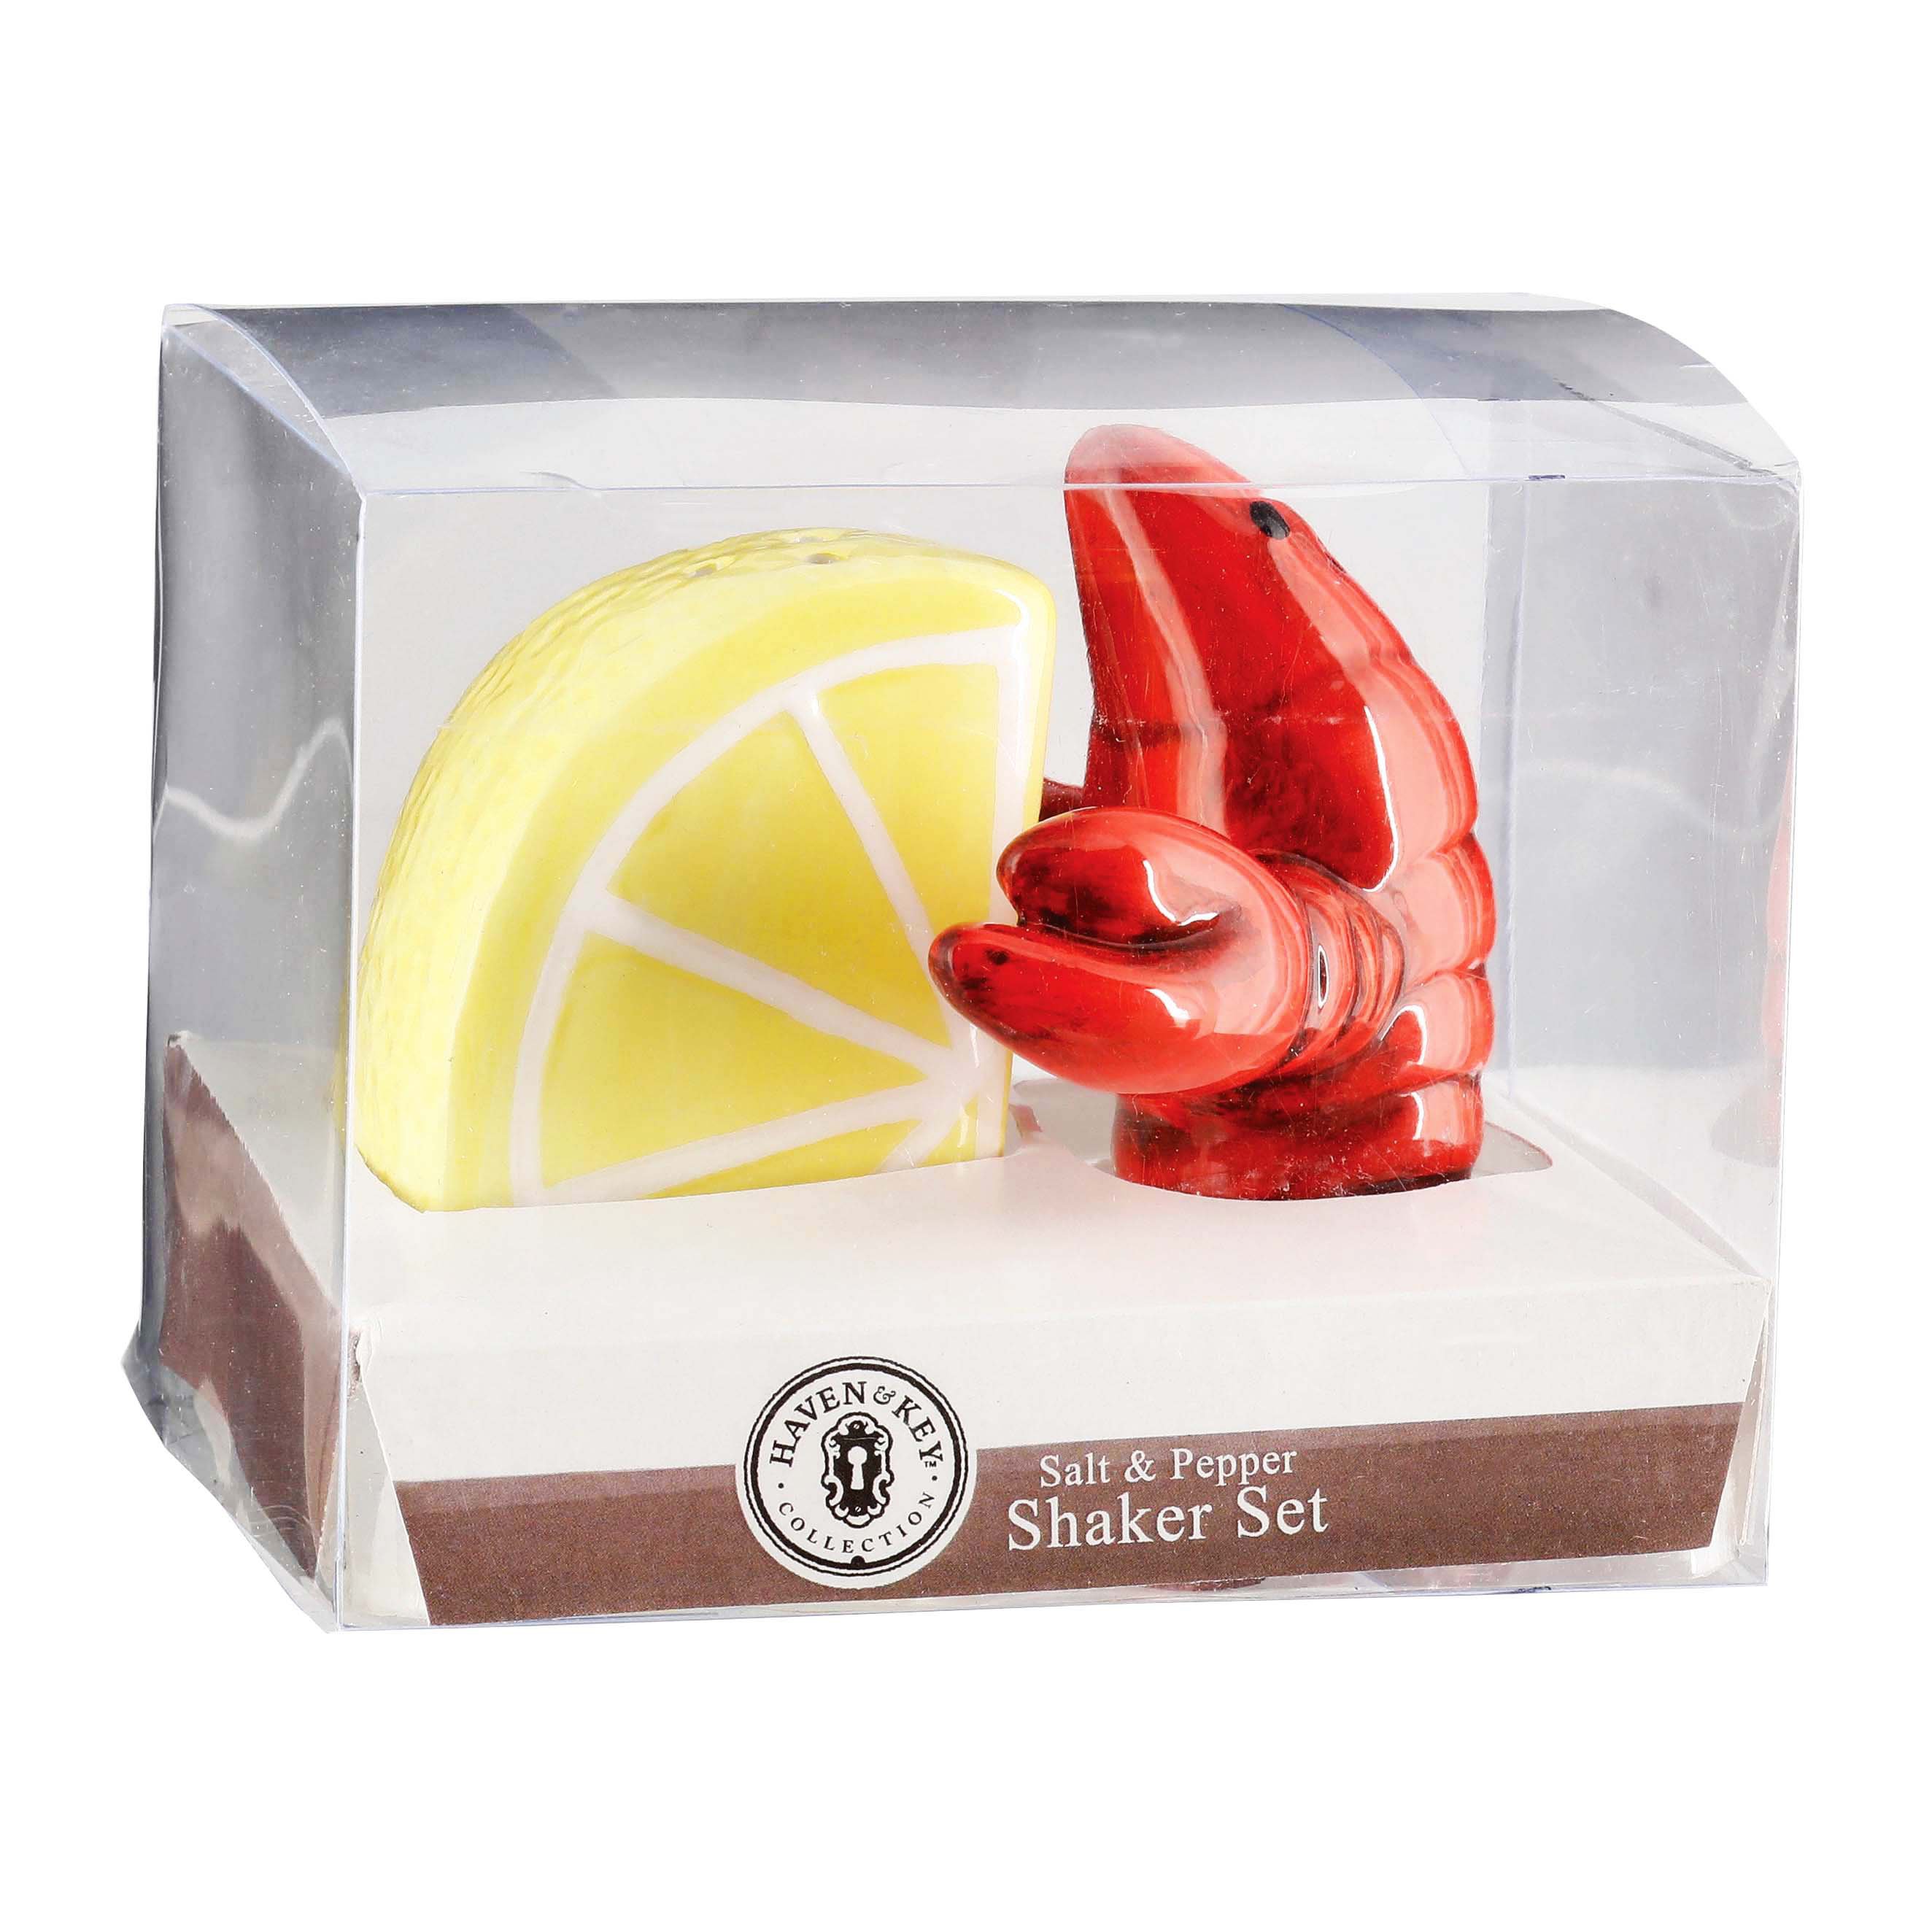 Haven & Key Crawfish & Lemon Salt & Pepper Shaker Set - Shop Food Storage  at H-E-B